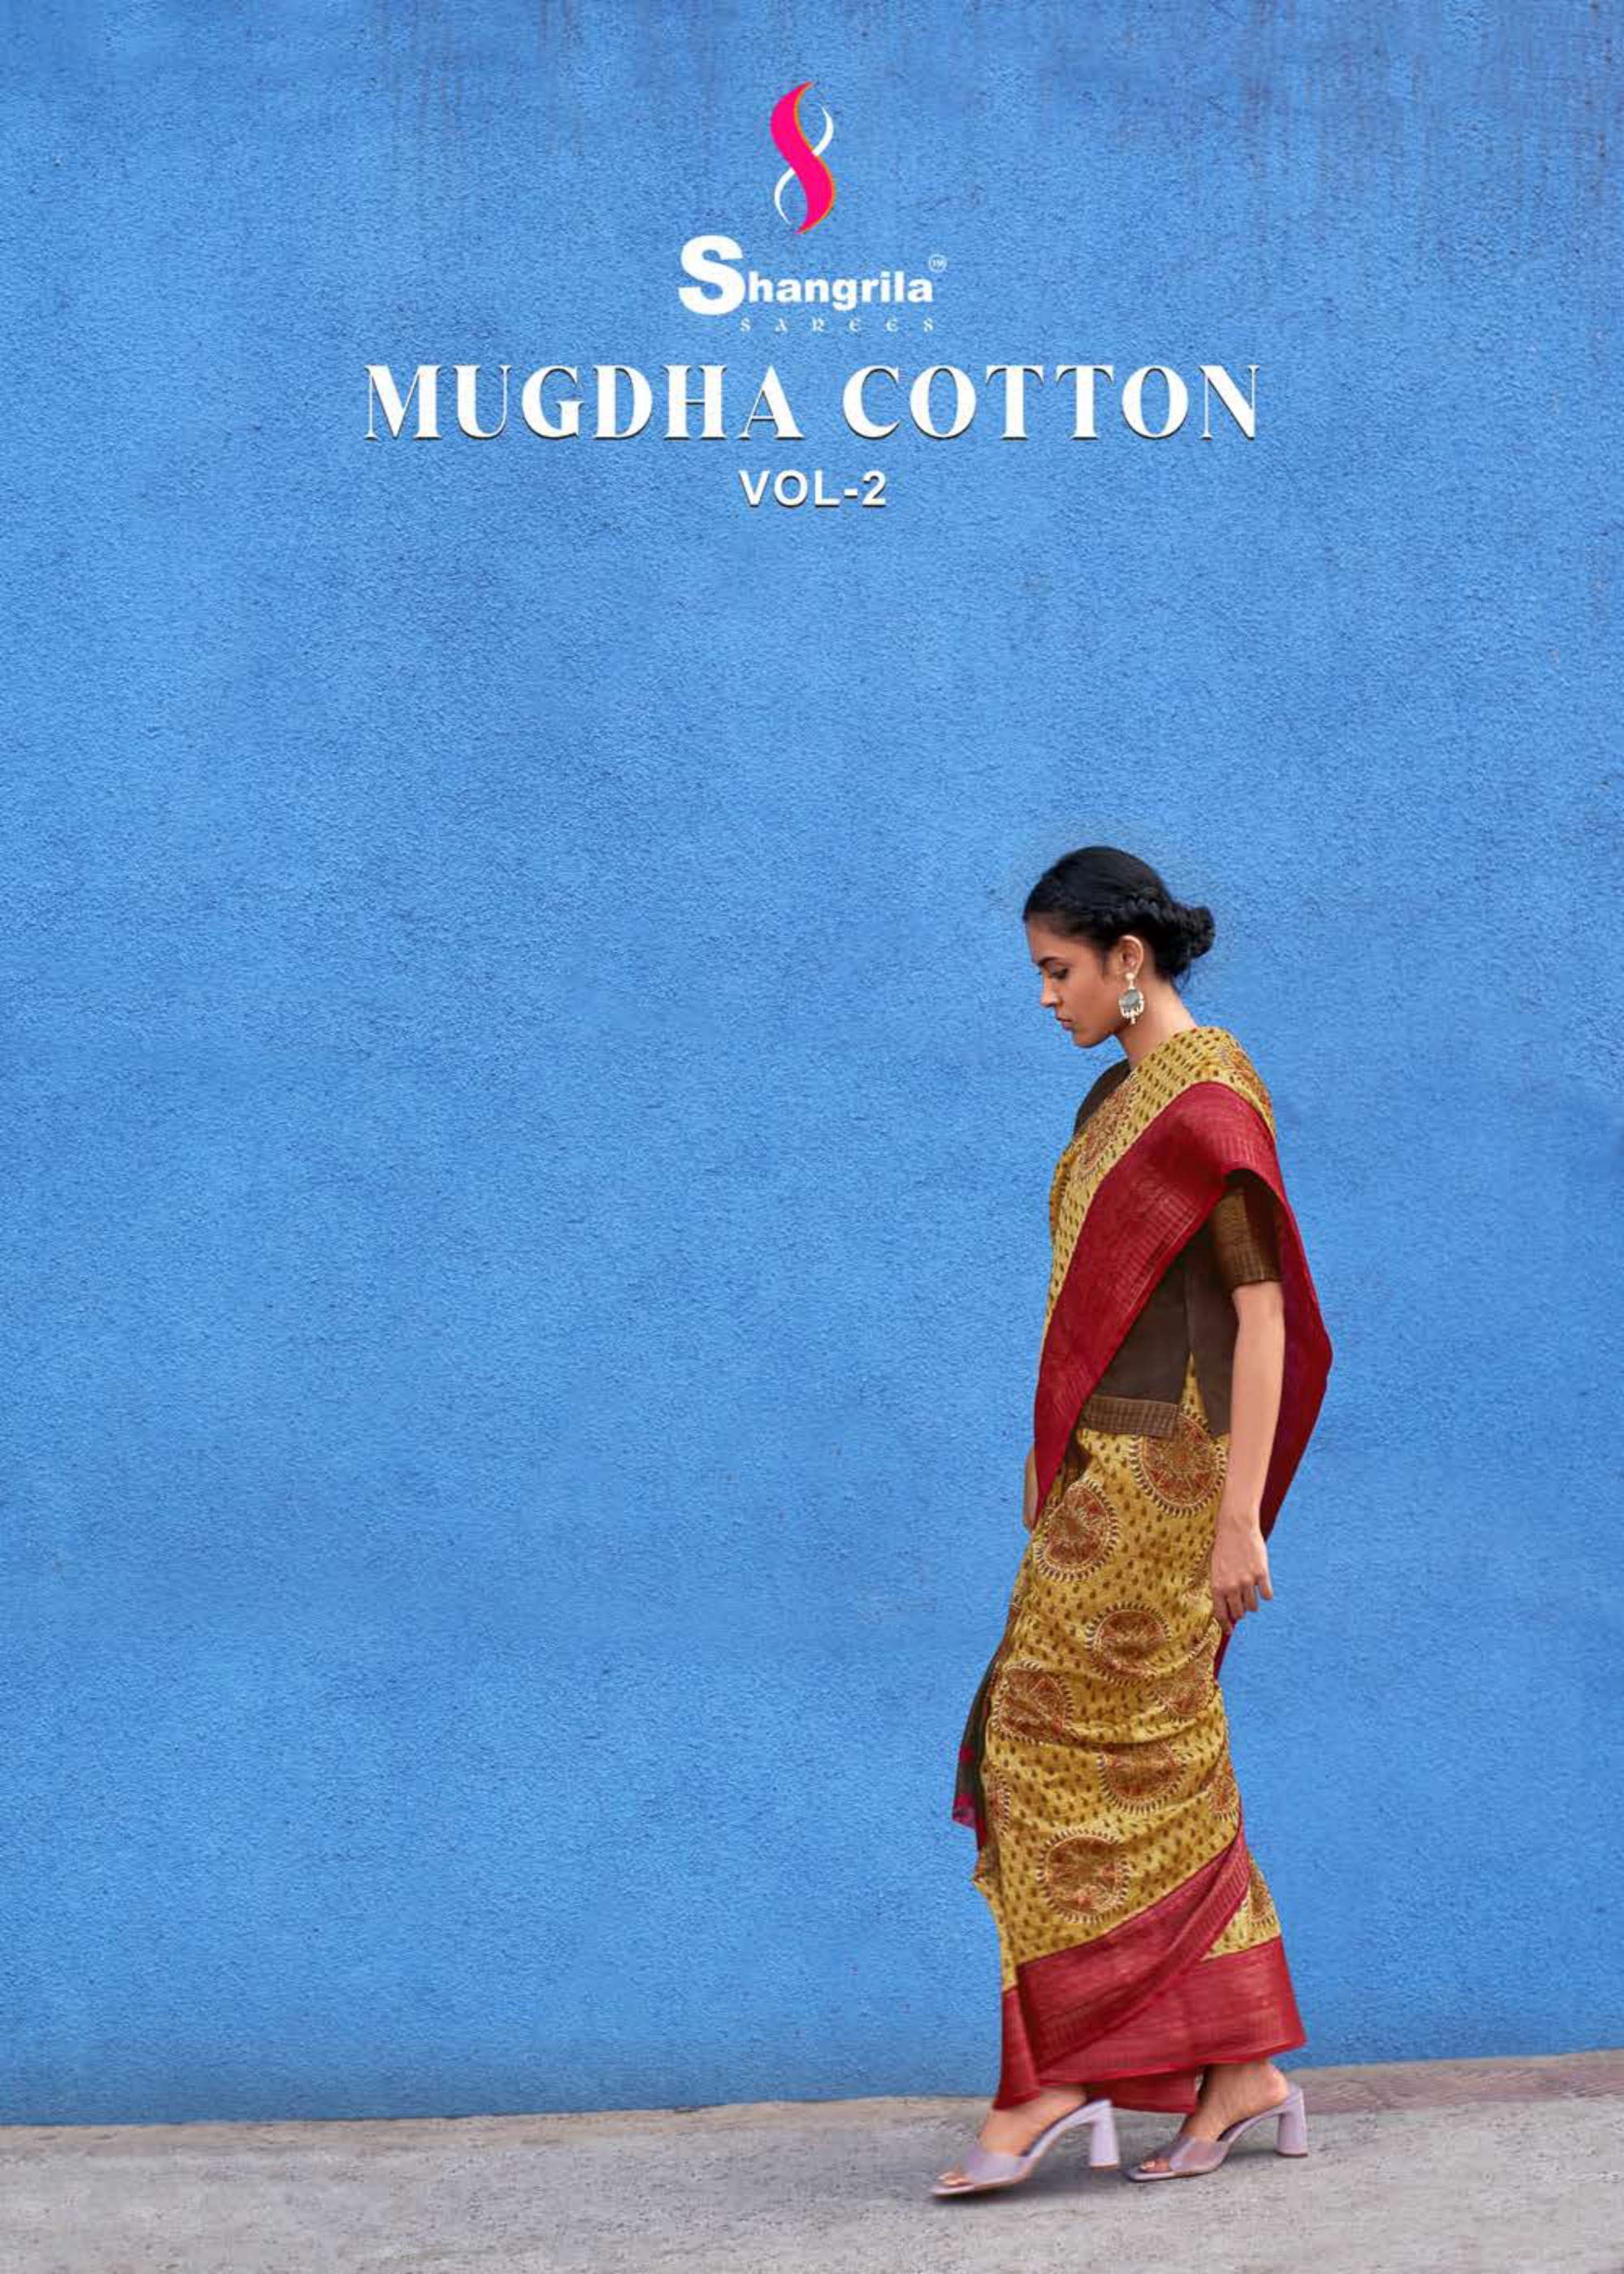 shangrila mugdha cotton vol 2 series 70571-70582 jacquard cotton saree